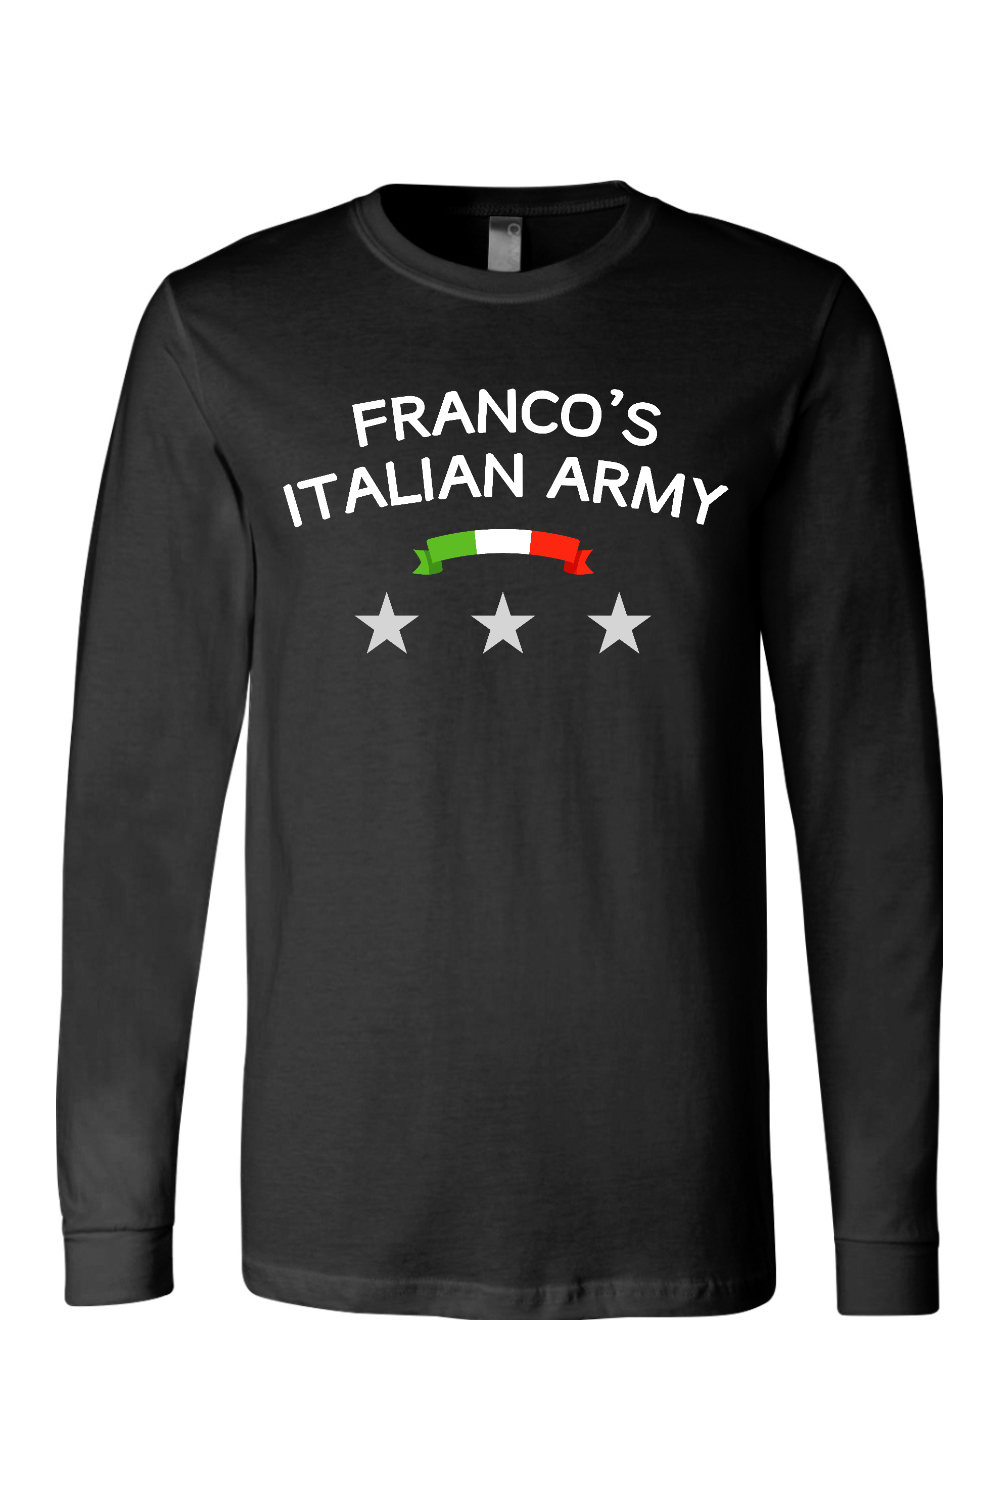 Franco's Italian Army - BELLA + CANVAS Unisex Jersey Long Sleeve Tee - Yinzylvania